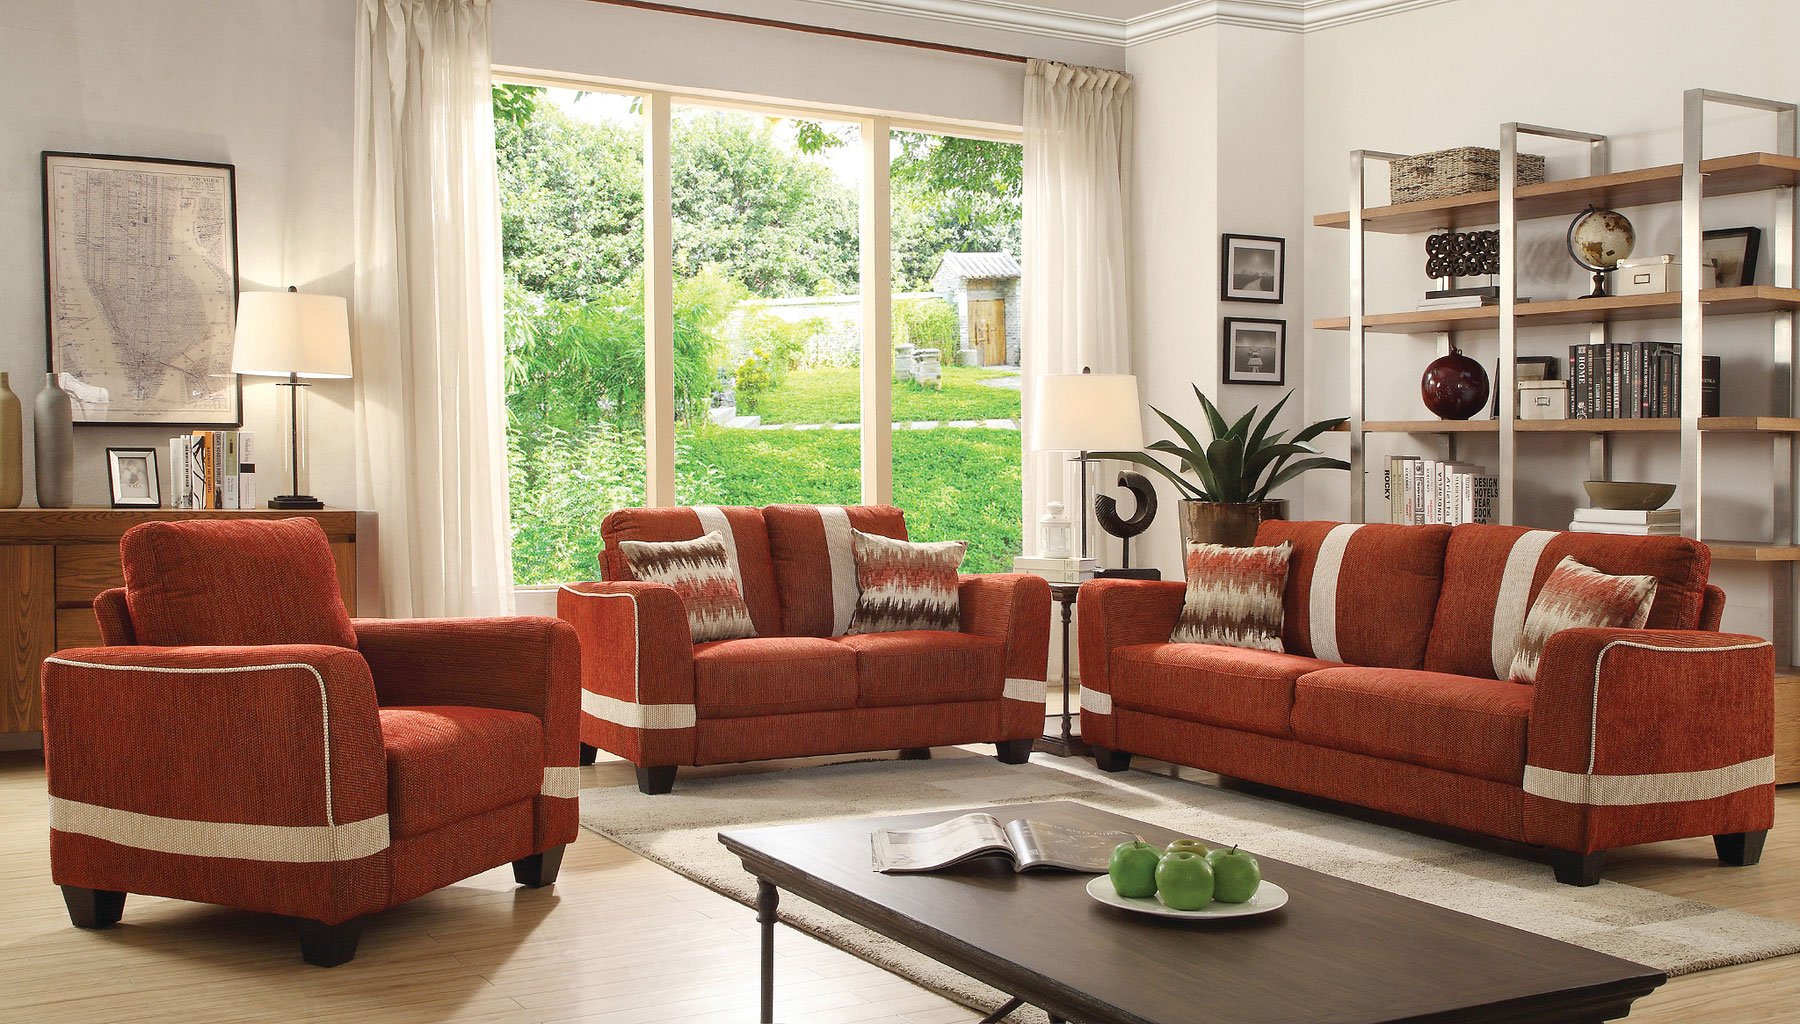 Red Beige Paris Theme Living Room Ideas